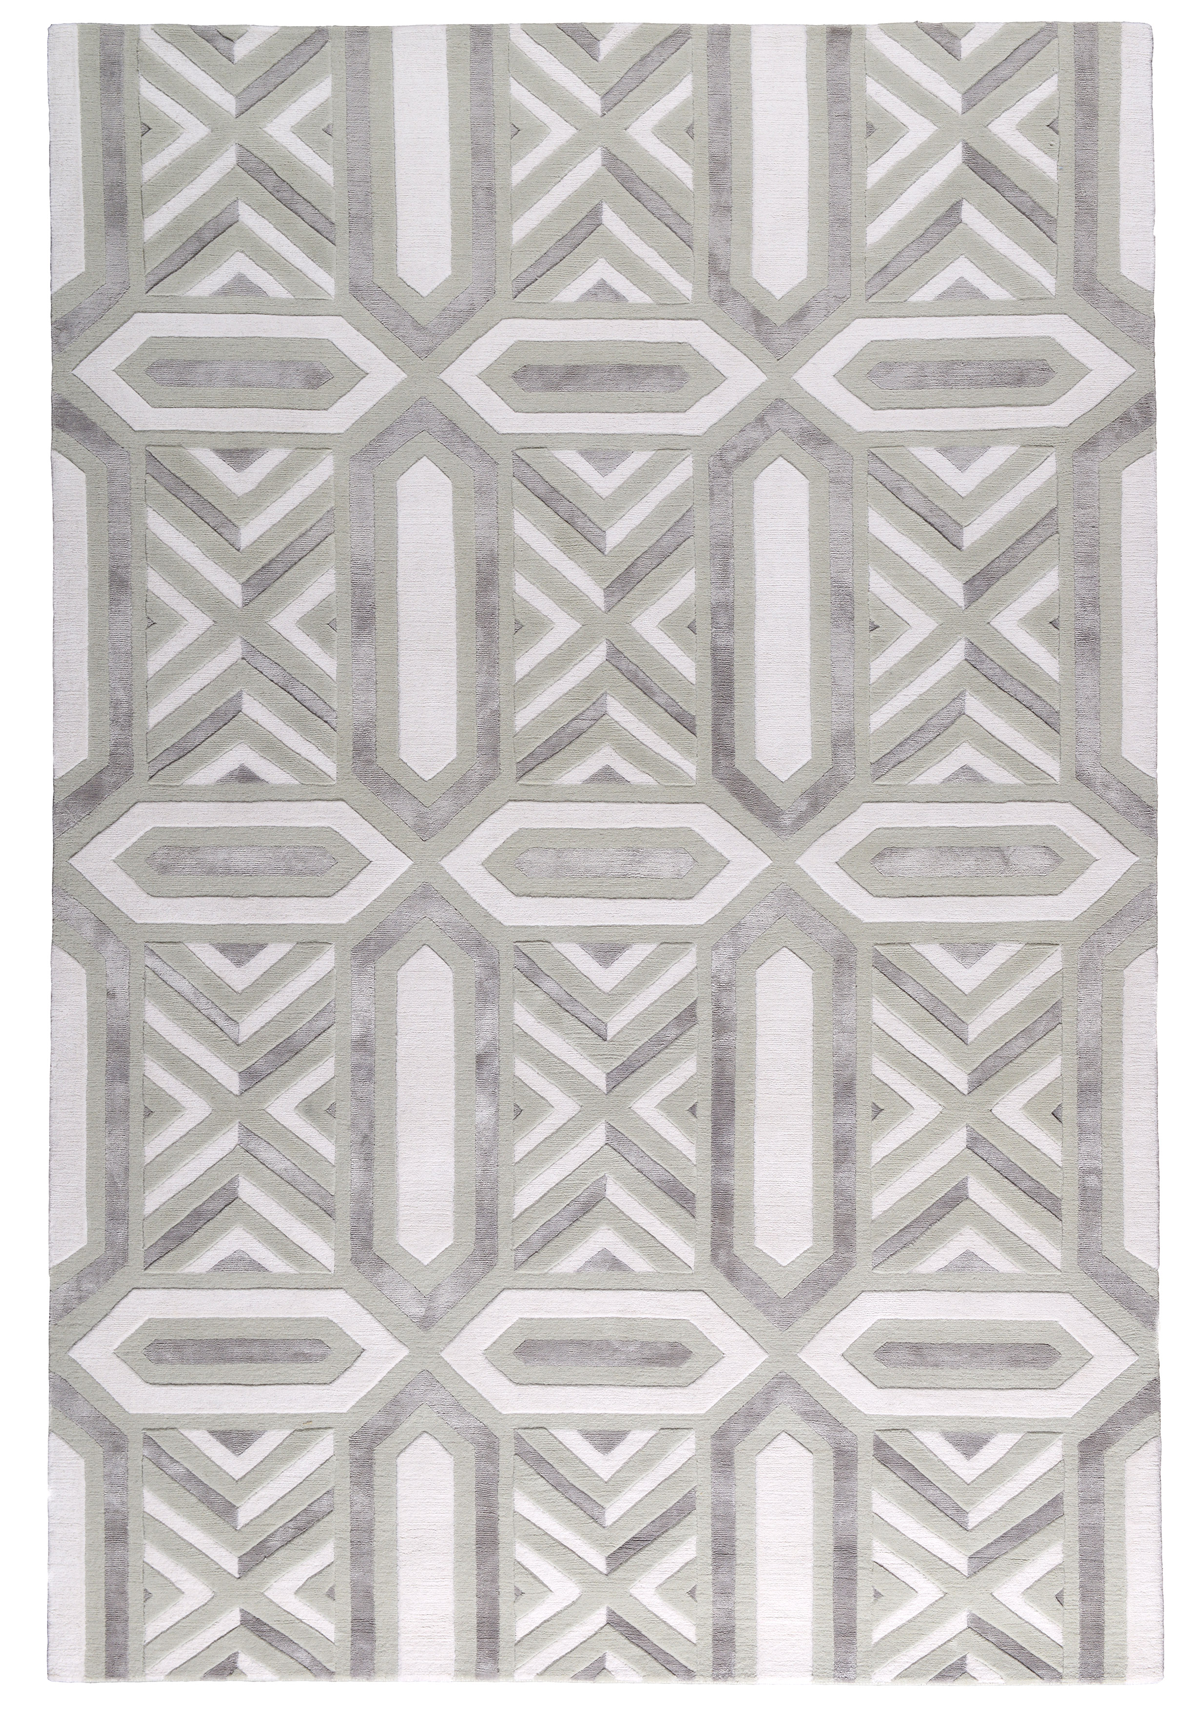 Custom Stevie Mac rug flatshot designed by Martyn Lawrence Bullard